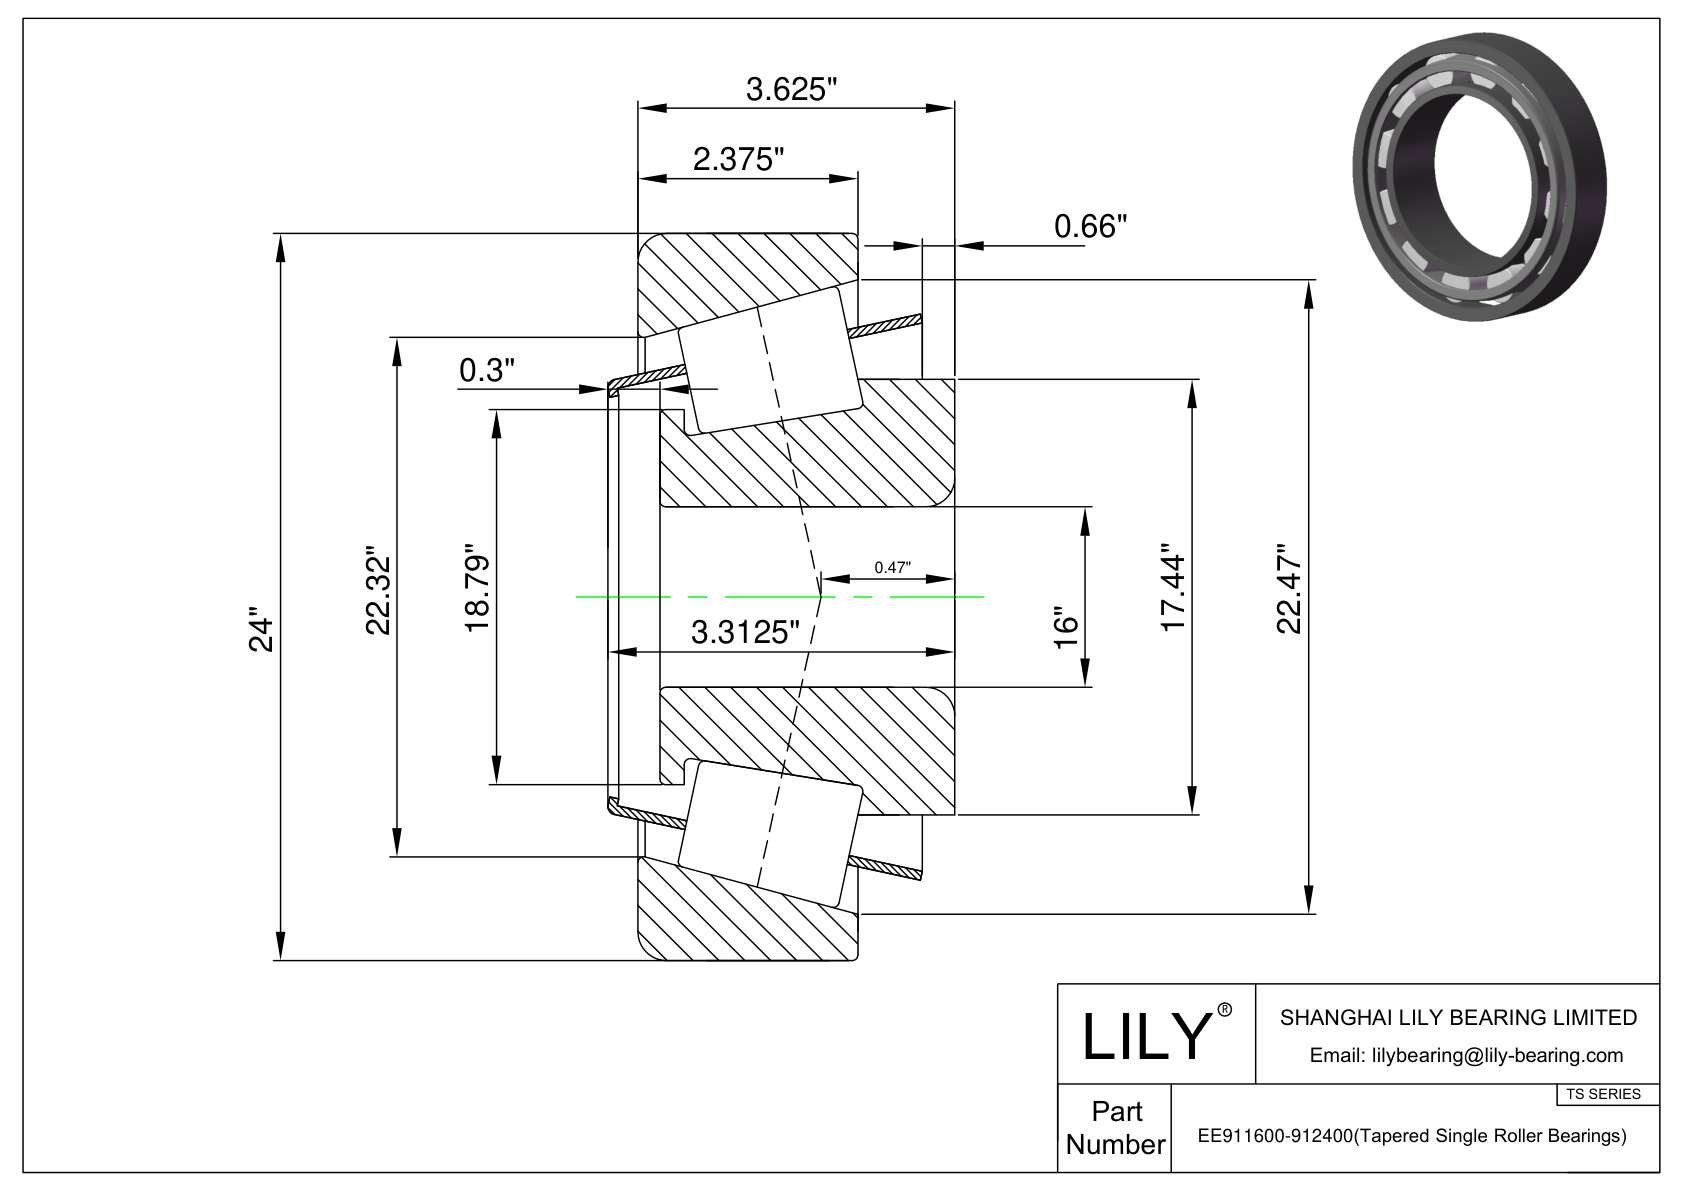 EE911600-912400 TS系列(圆锥单滚子轴承)(英制) CAD图形